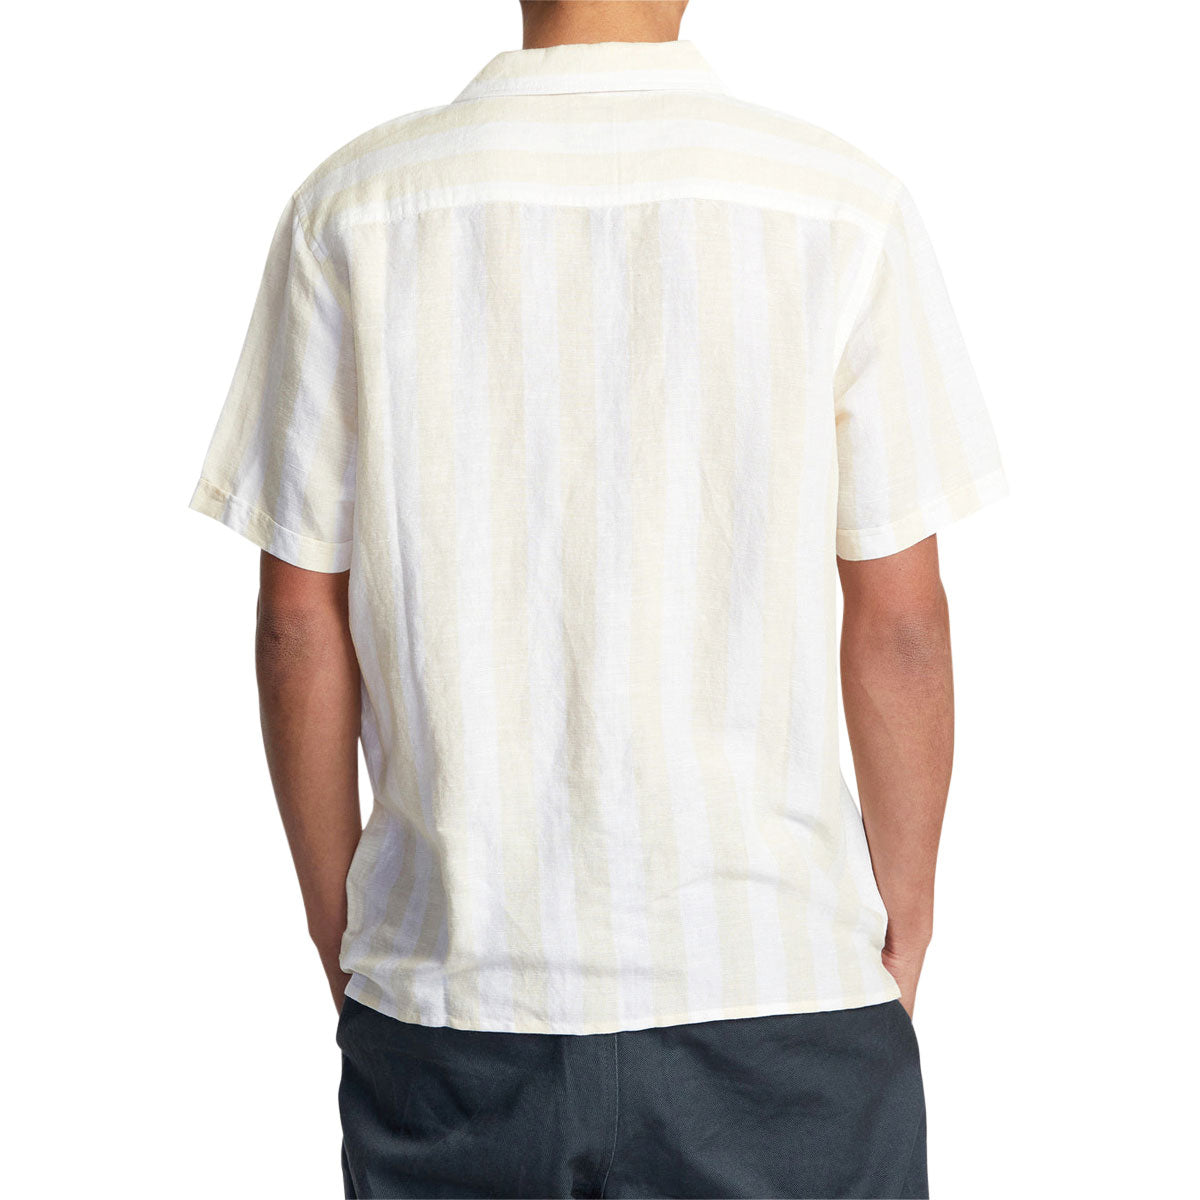 RVCA Love Stripe Shirt - Canary image 2